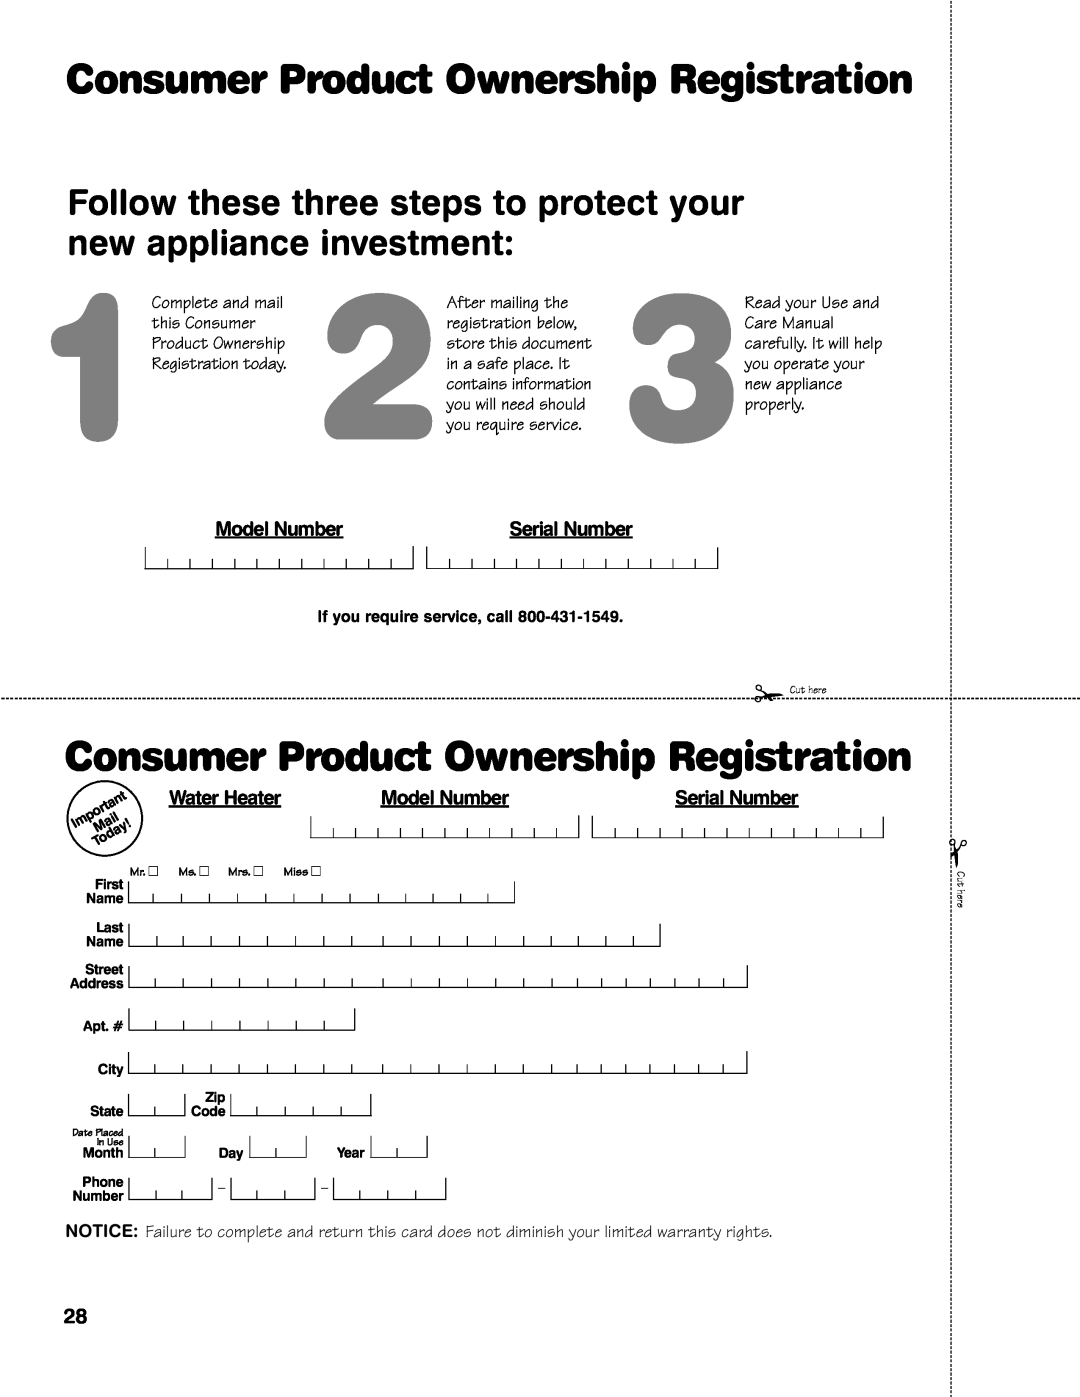 GE SG Series, HG Series, PG Series Model Number, Serial Number, Water Heater, Consumer Product Ownership Registration 